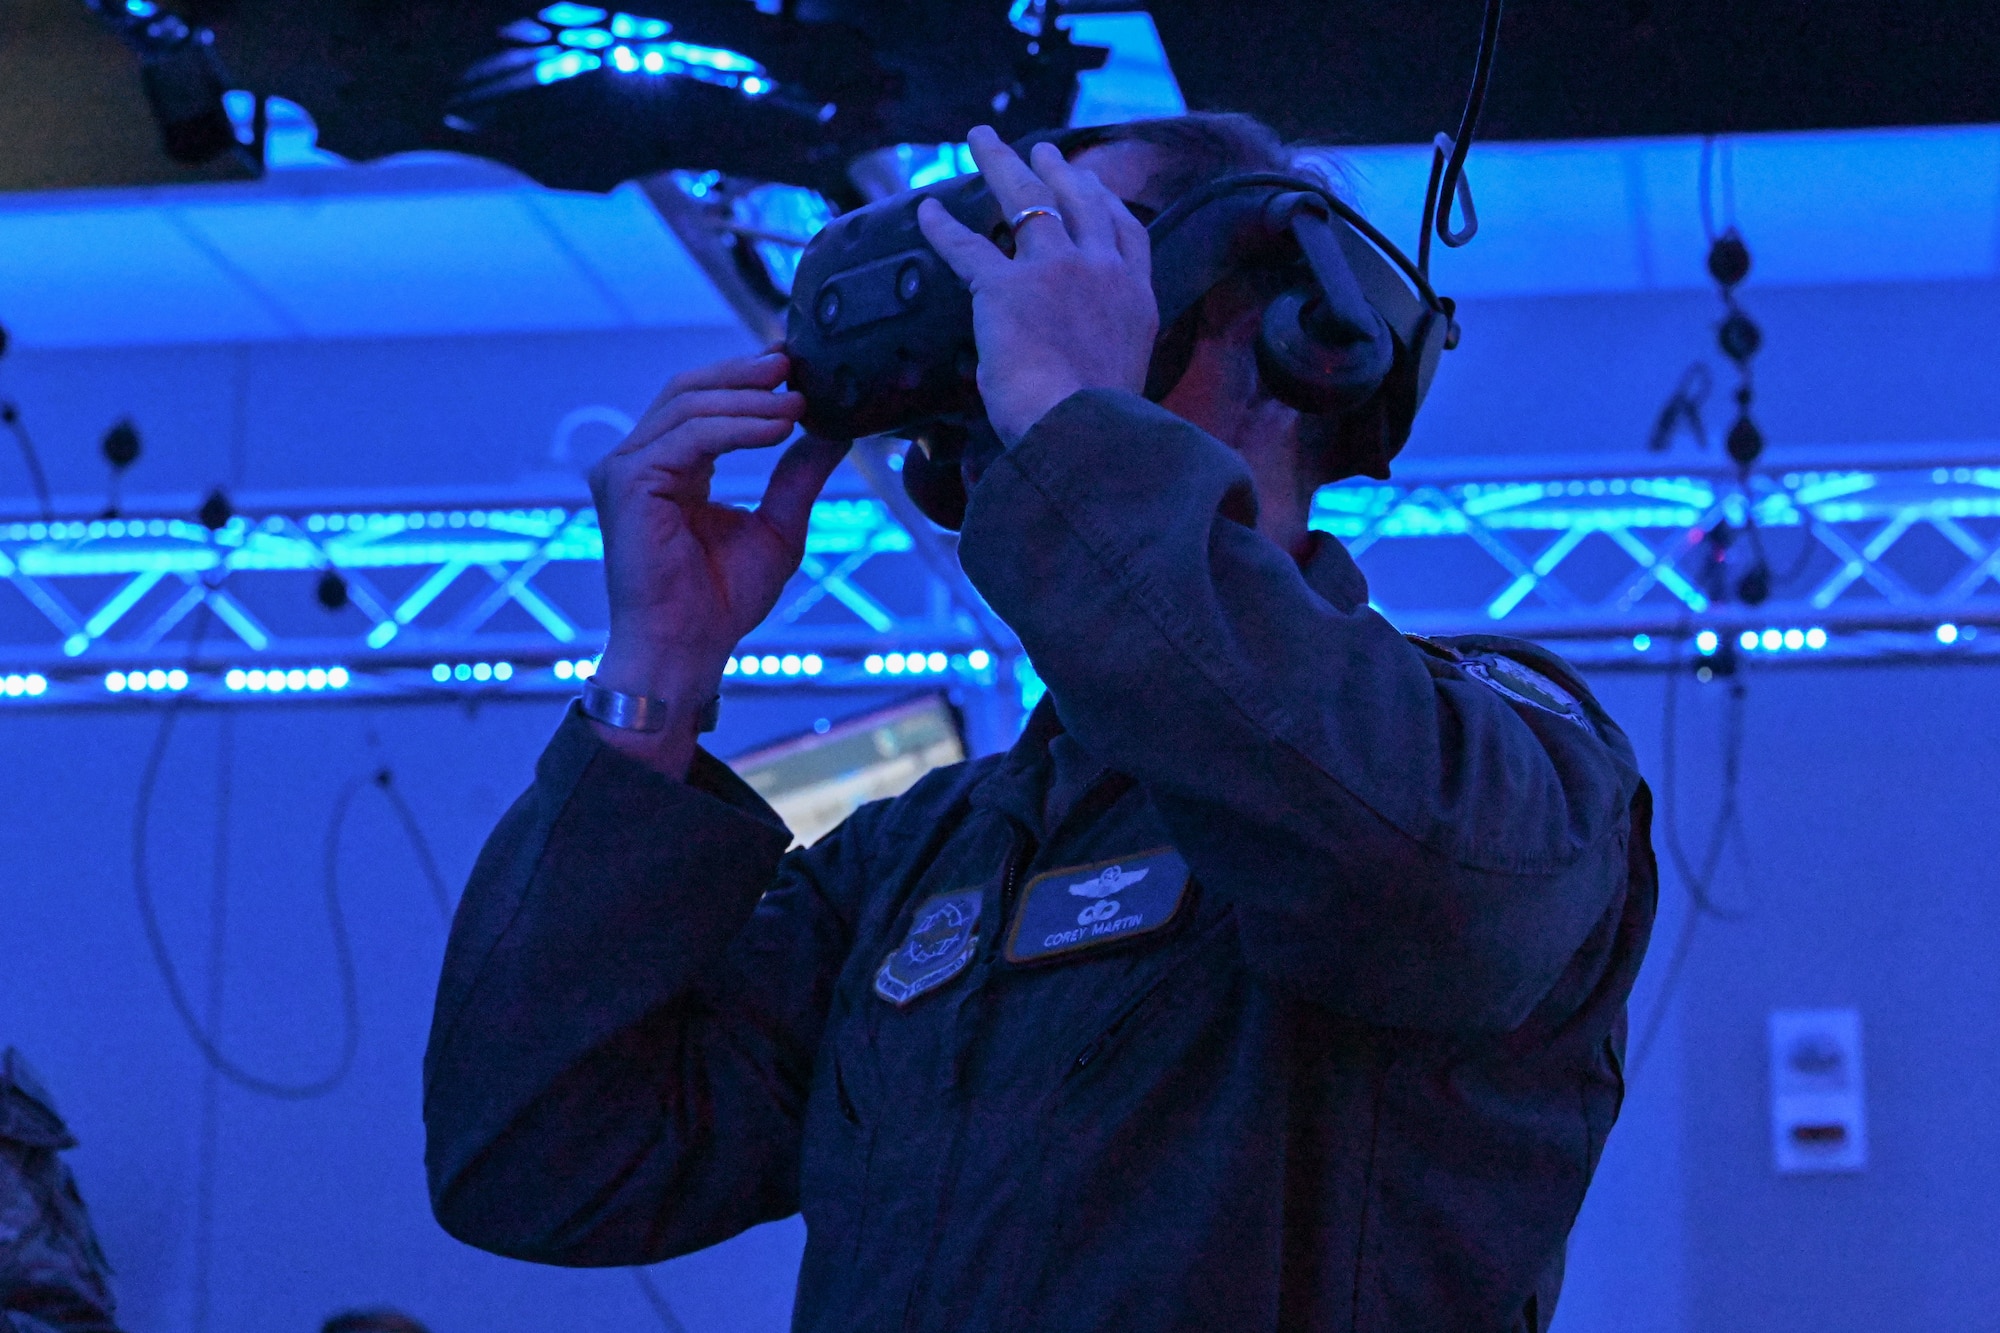 man in uniform experiences virtual reality training